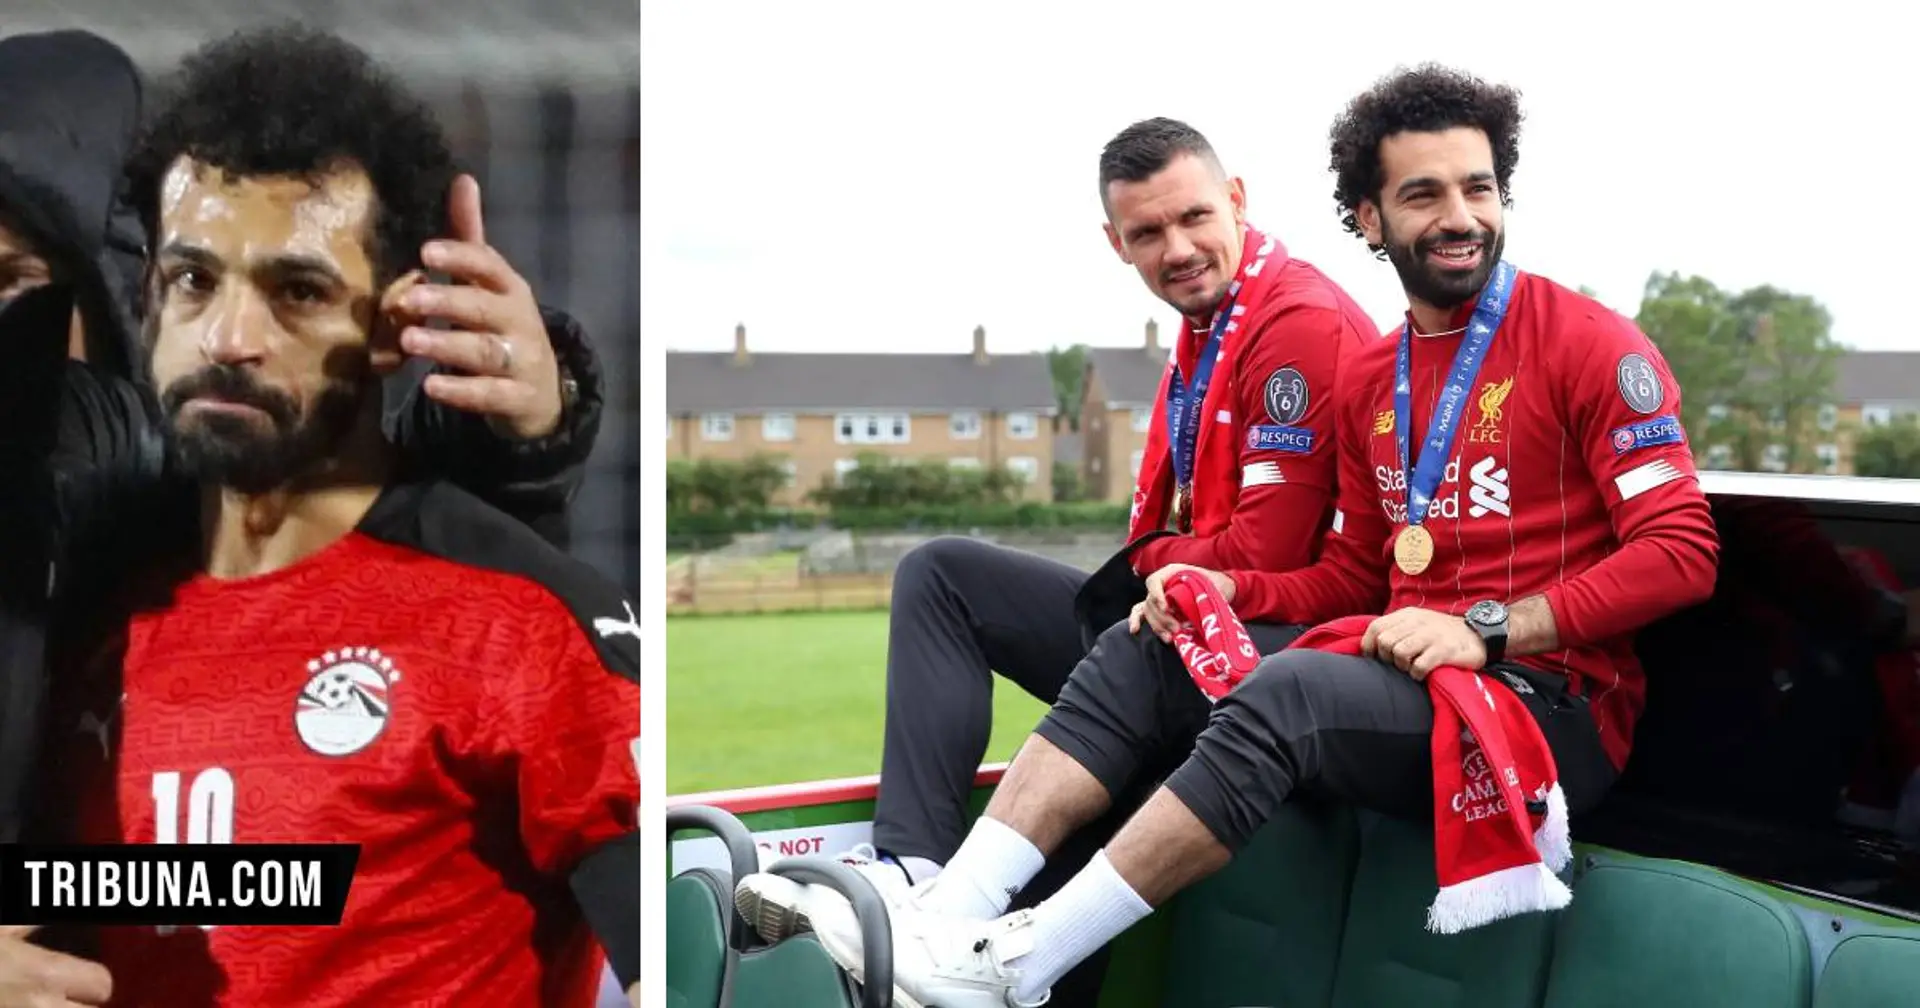 Lovren sends message of support to Salah after World Cup heartbreak 